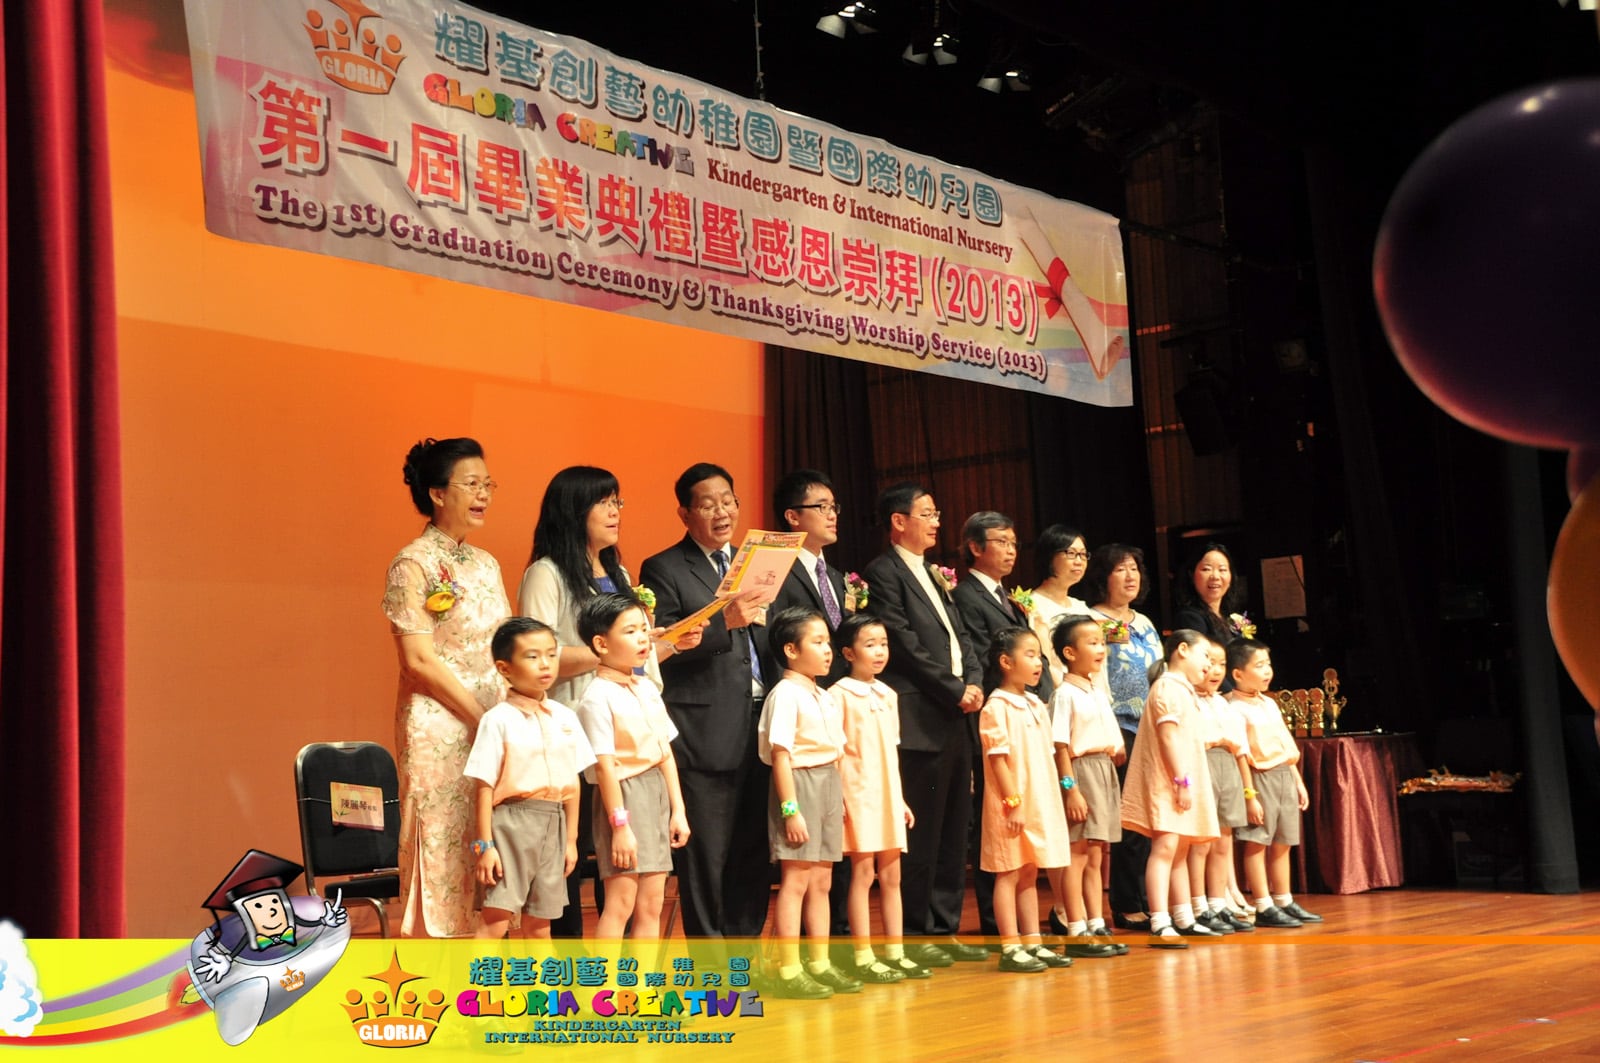 Photo of 【Photo】The 1st Graduation Ceremony & Thanksgiving Worship Service (2013)